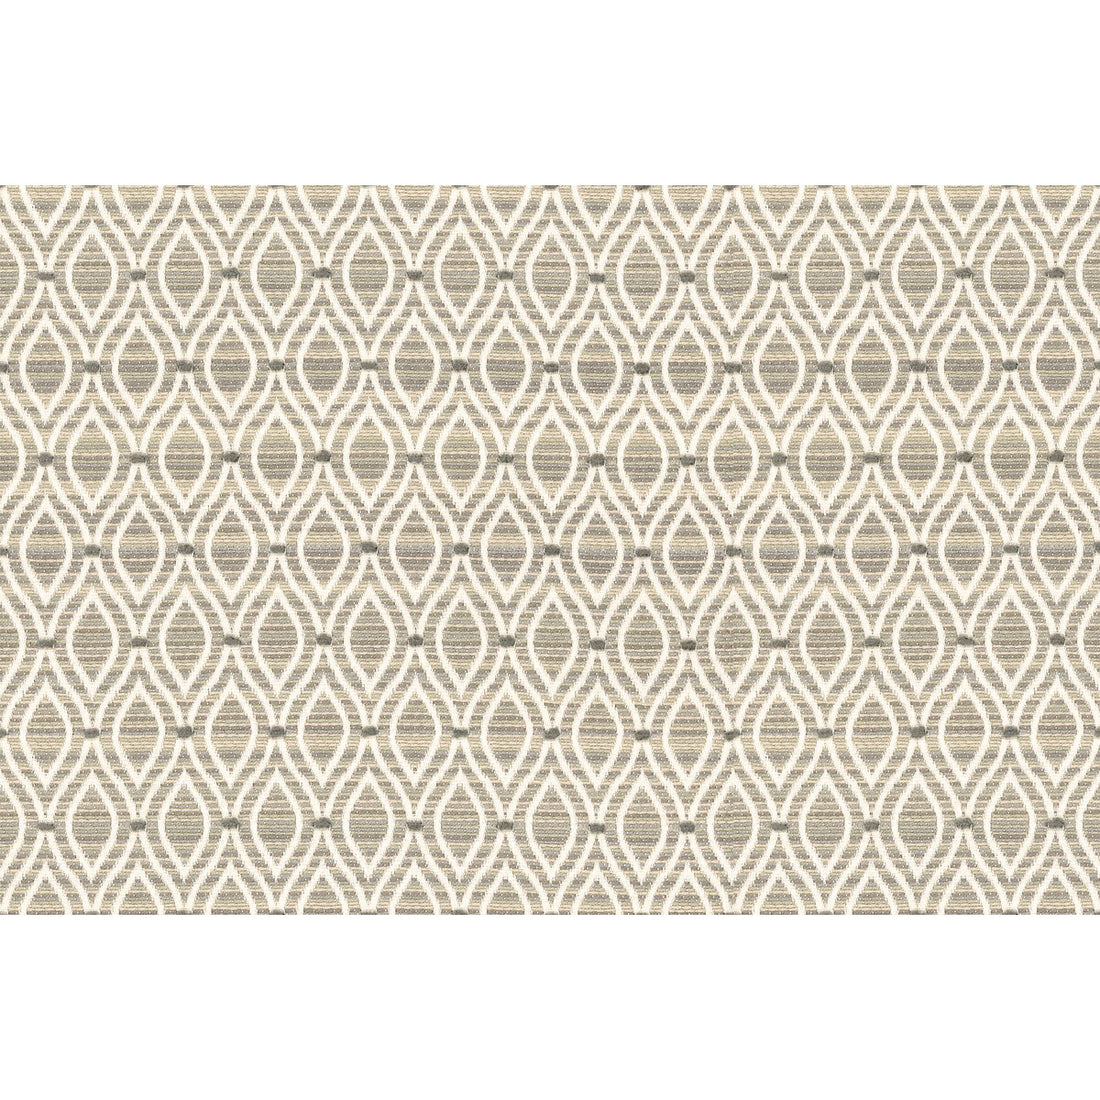 Kravet Smart fabric in 34288-1611 color - pattern 34288.1611.0 - by Kravet Smart